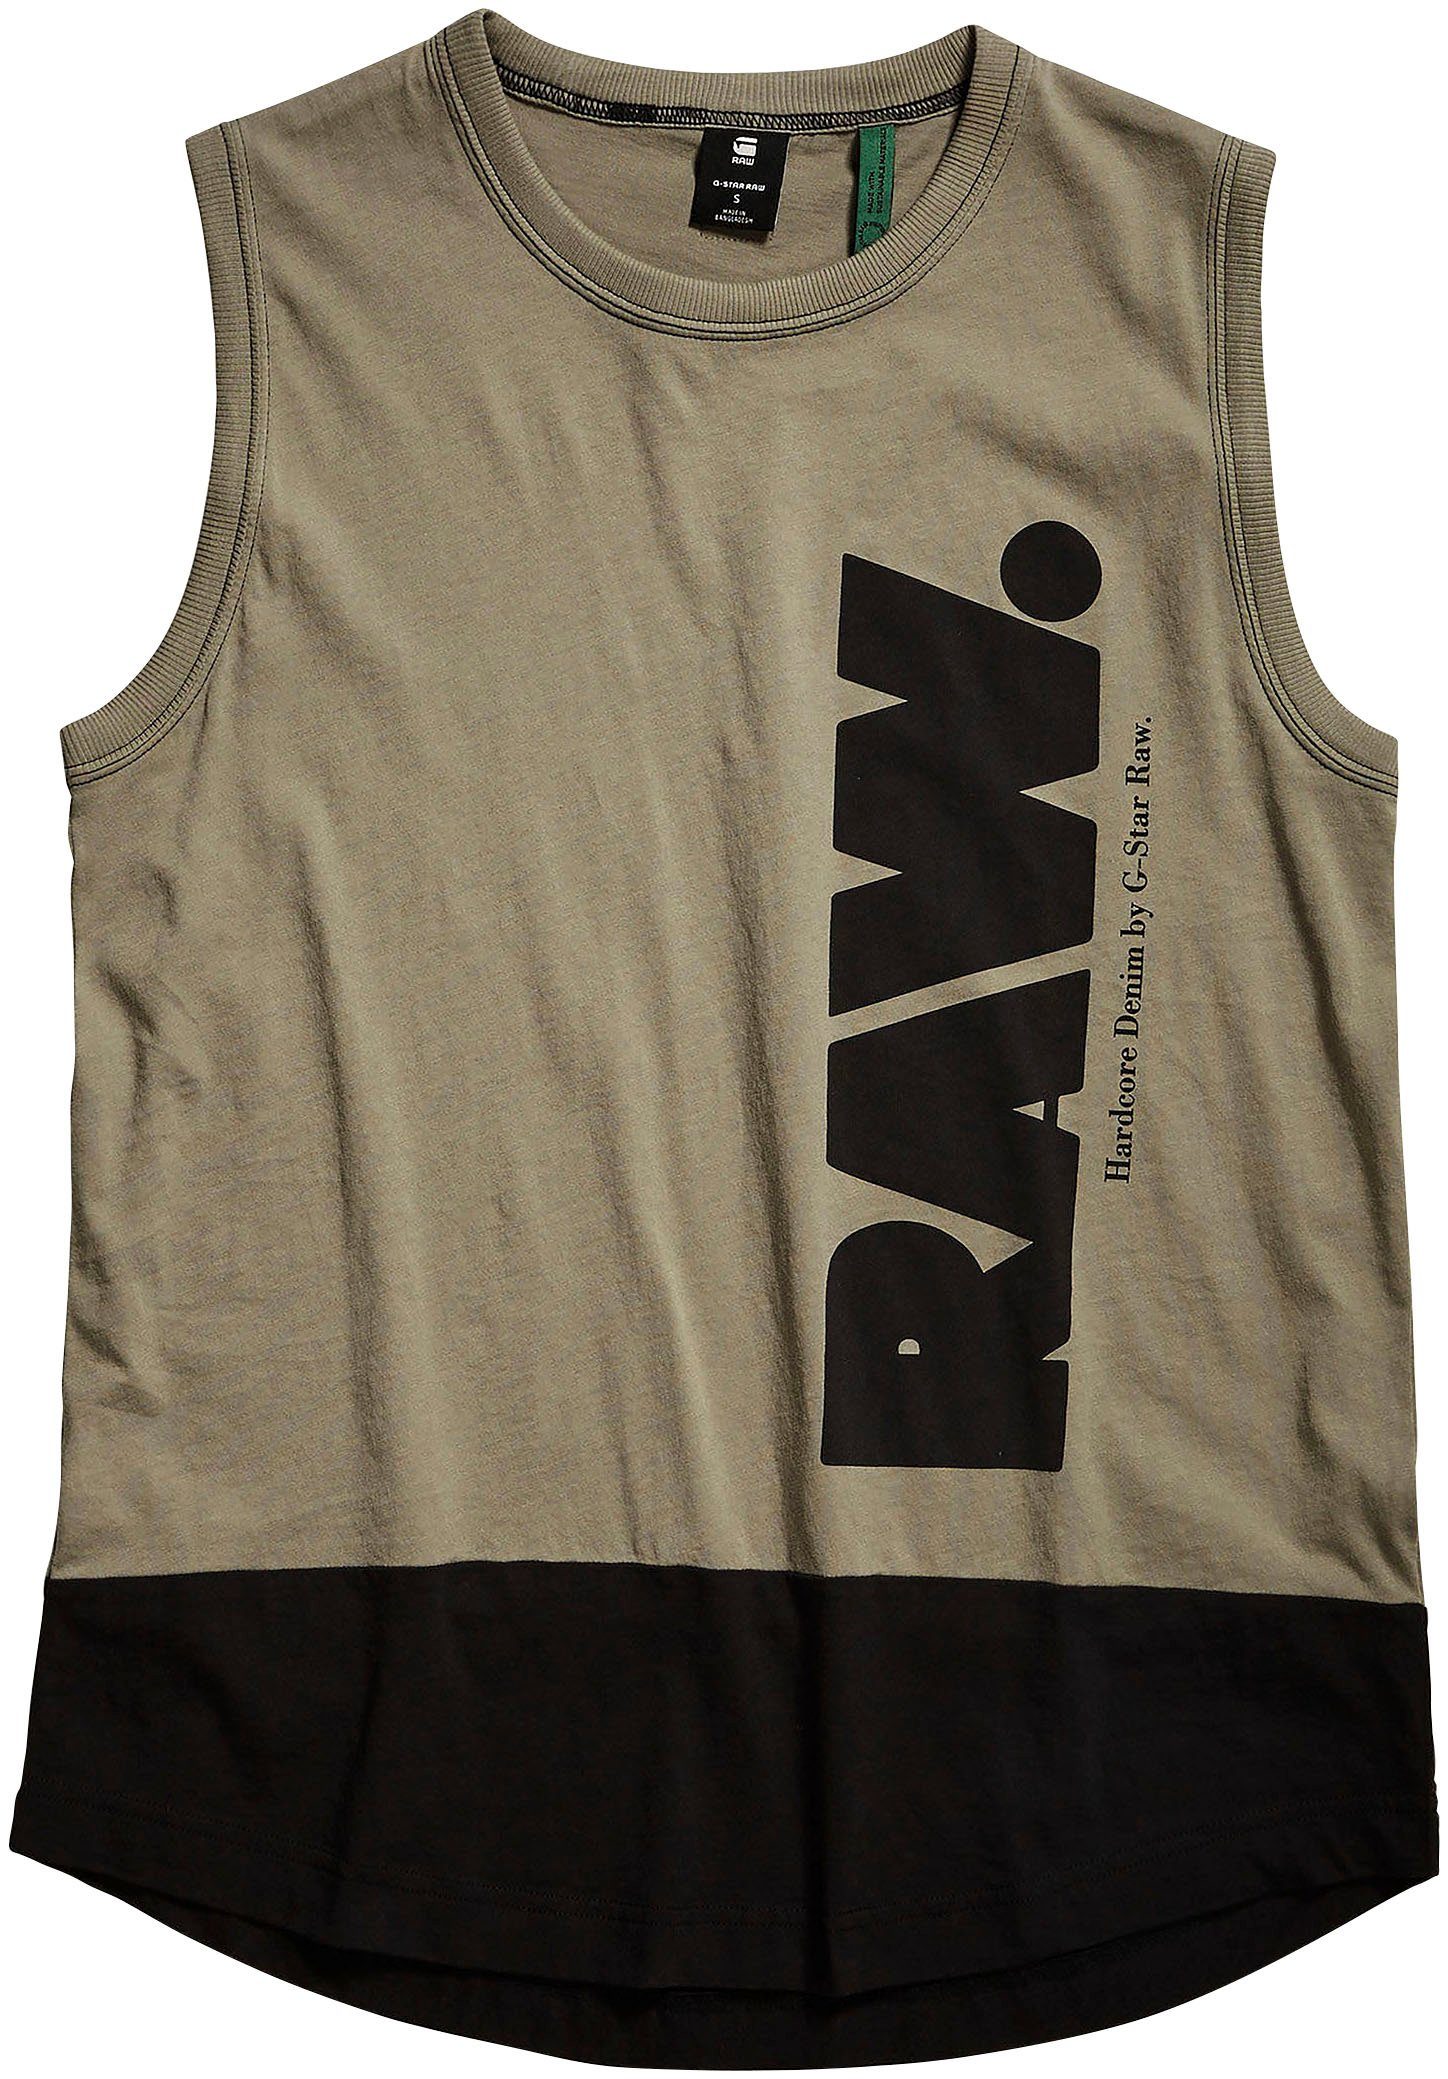 G-Star RAW T-Shirt Logo block black mti to T-Shirt (oliv/schwarz) Lash Grafikdruck tank shamrock/dk vorne color